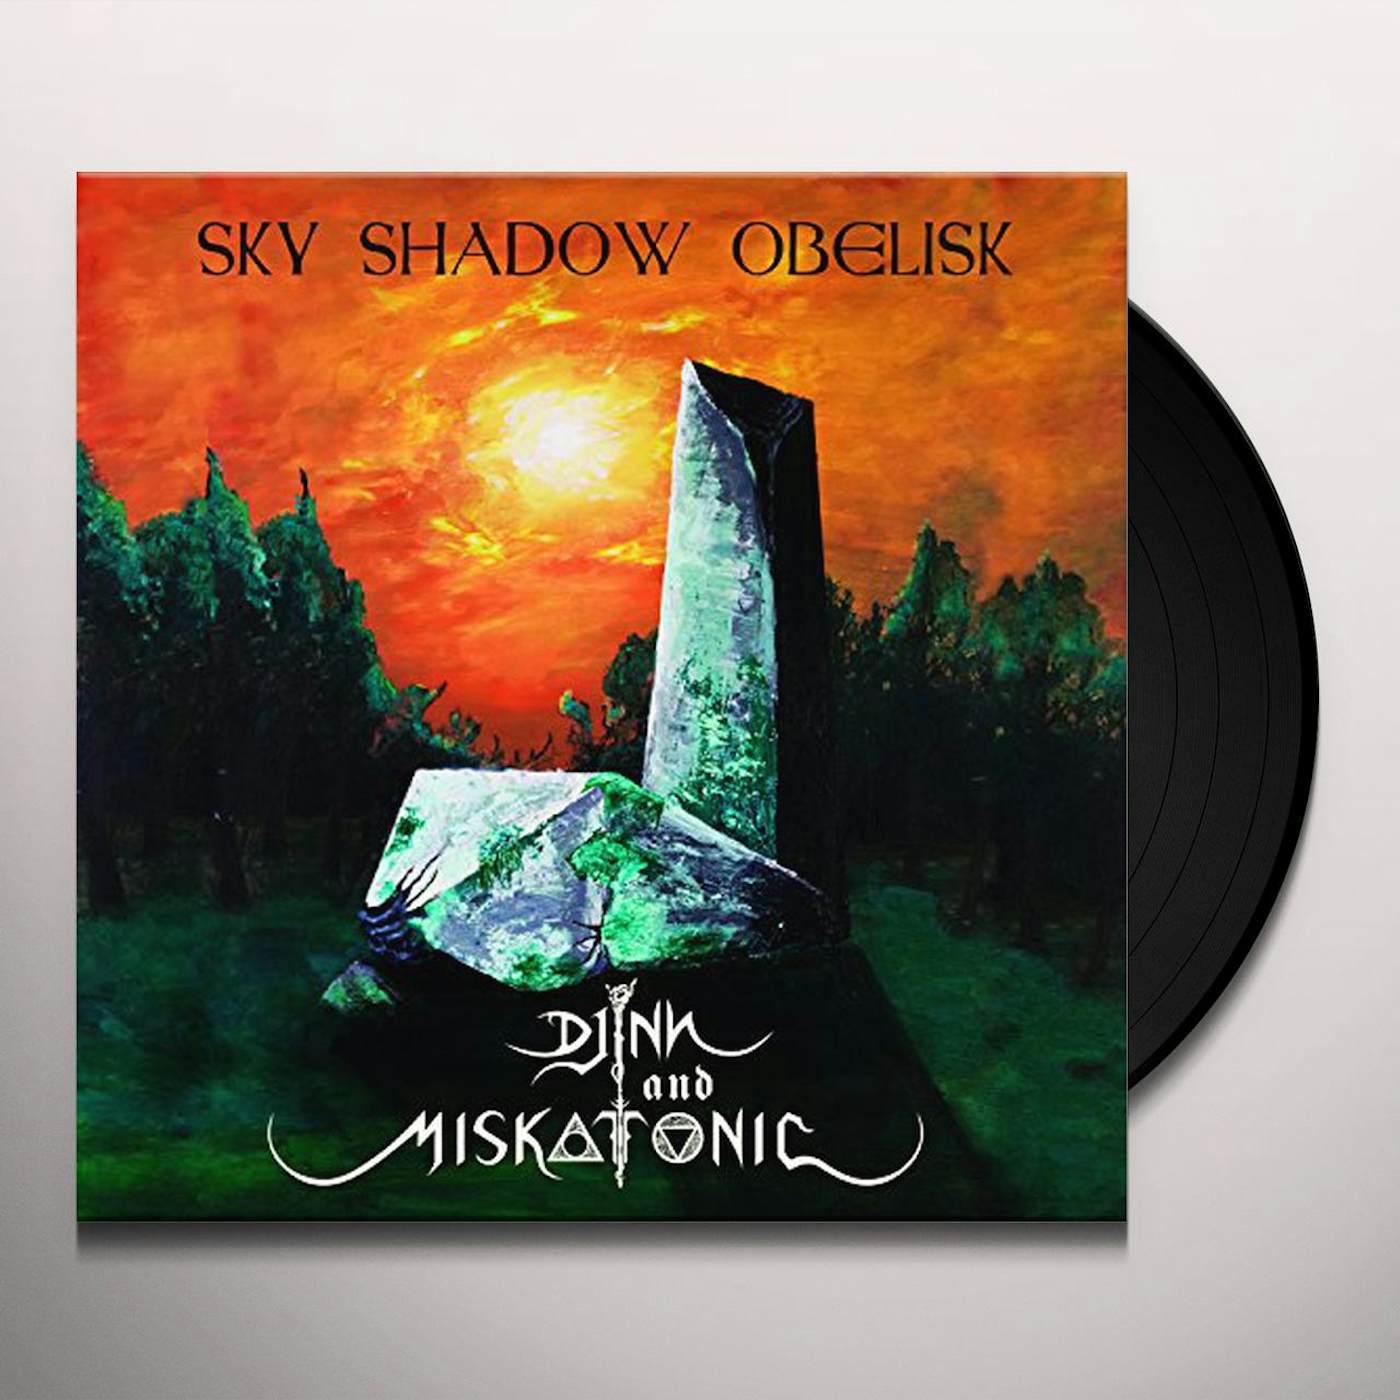 Sky Shadow Obelisk & Djinn